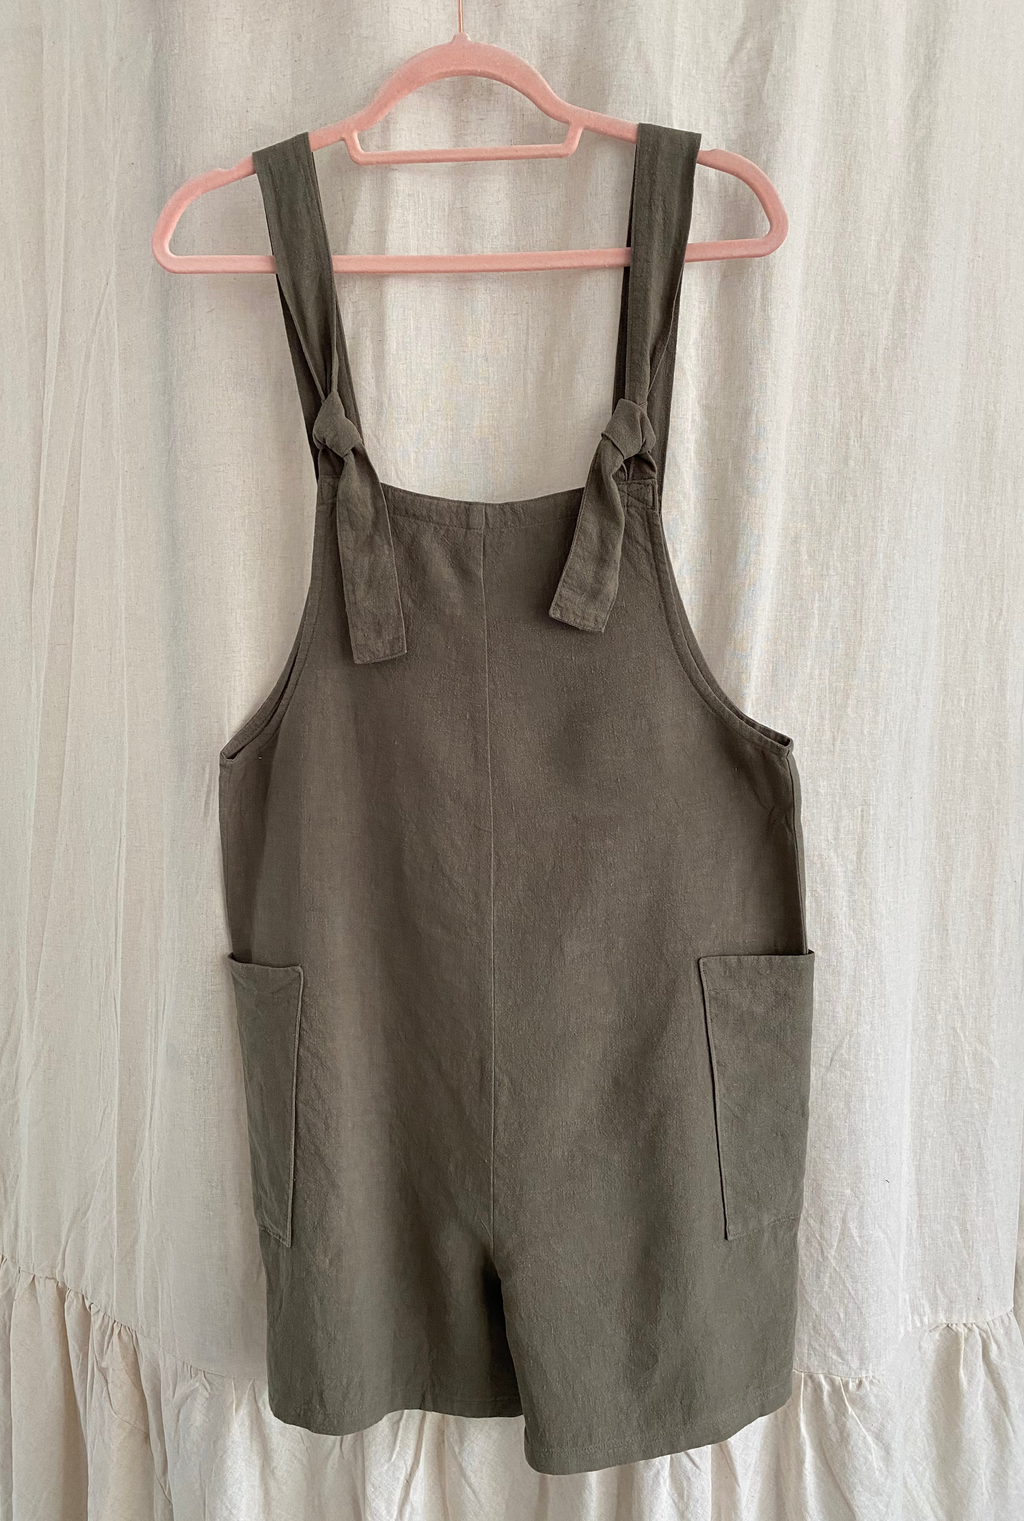 Marketplace - Small - Dungaree Shorts - Antique Linen - Khaki